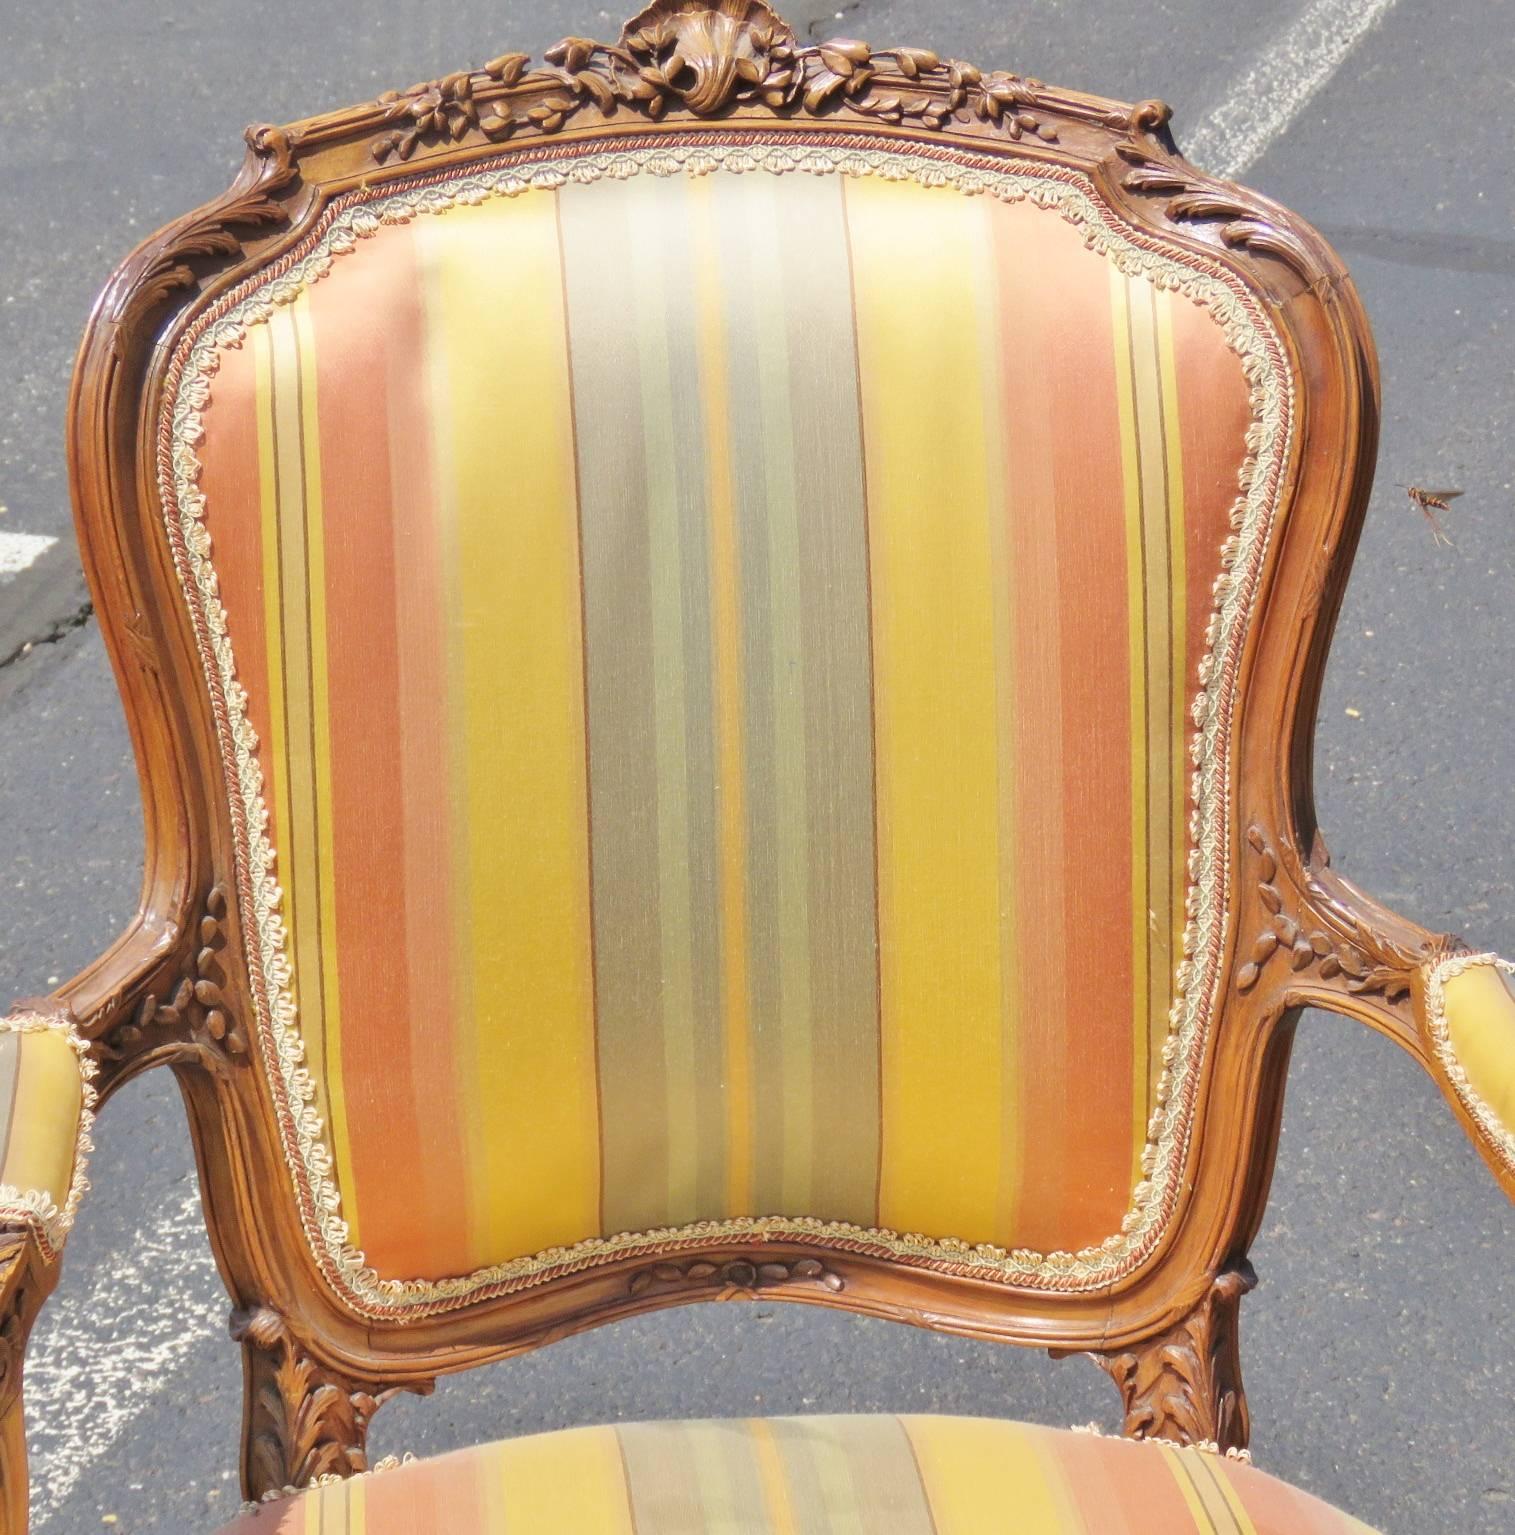 Carved walnut frames. Striped upholstered backs and seats.